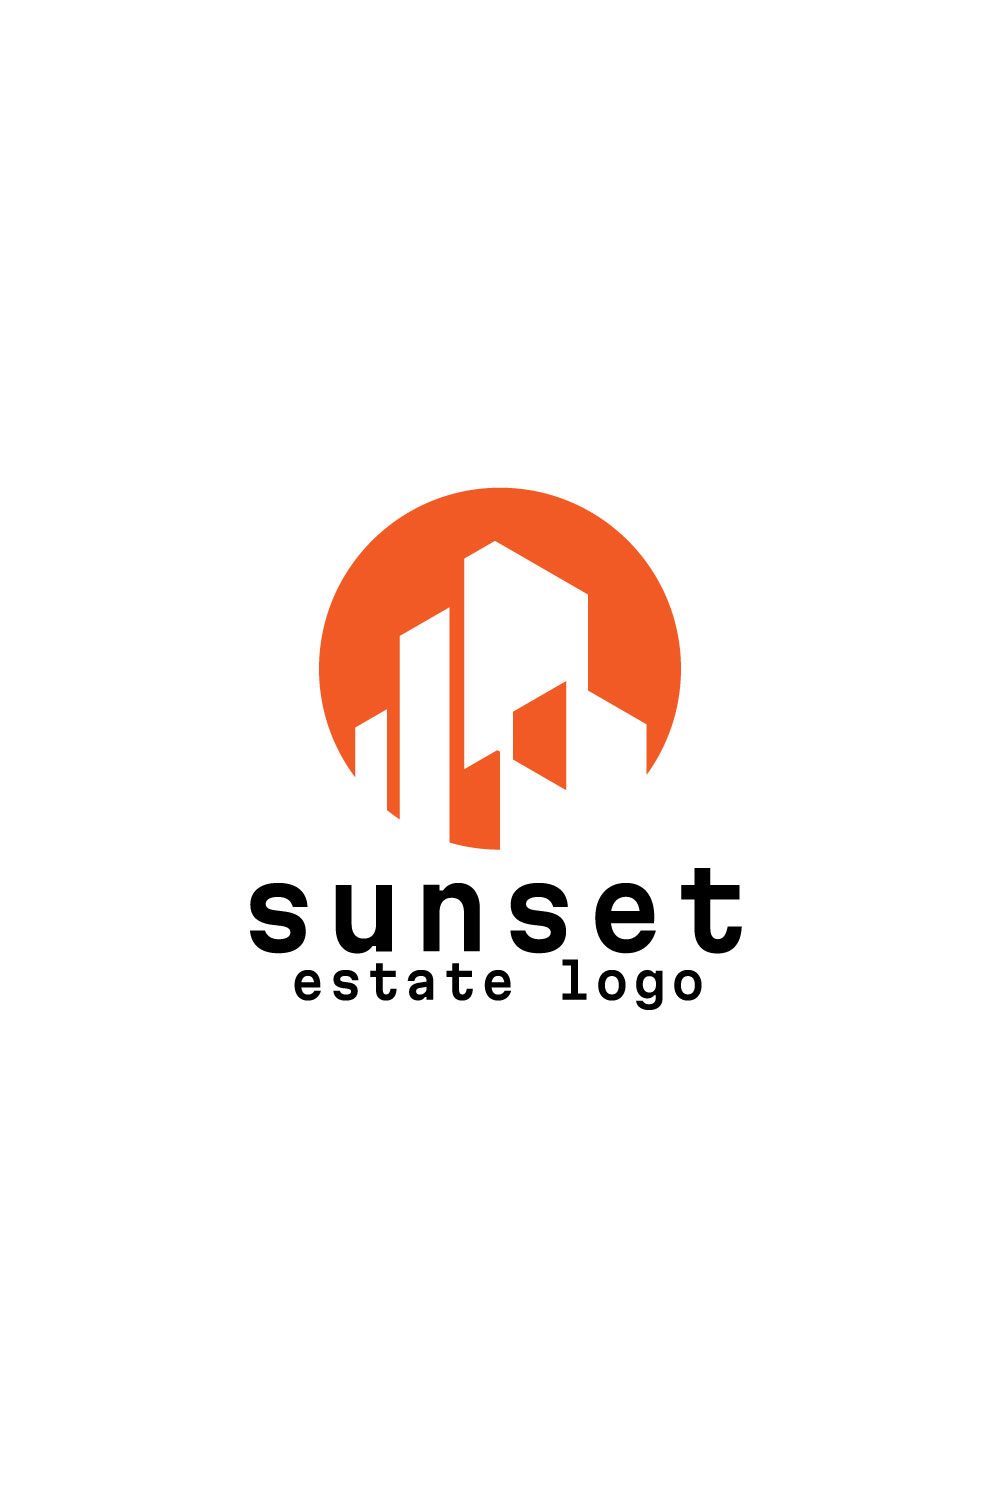 Sunset Real Estate Logo pinterest preview image.